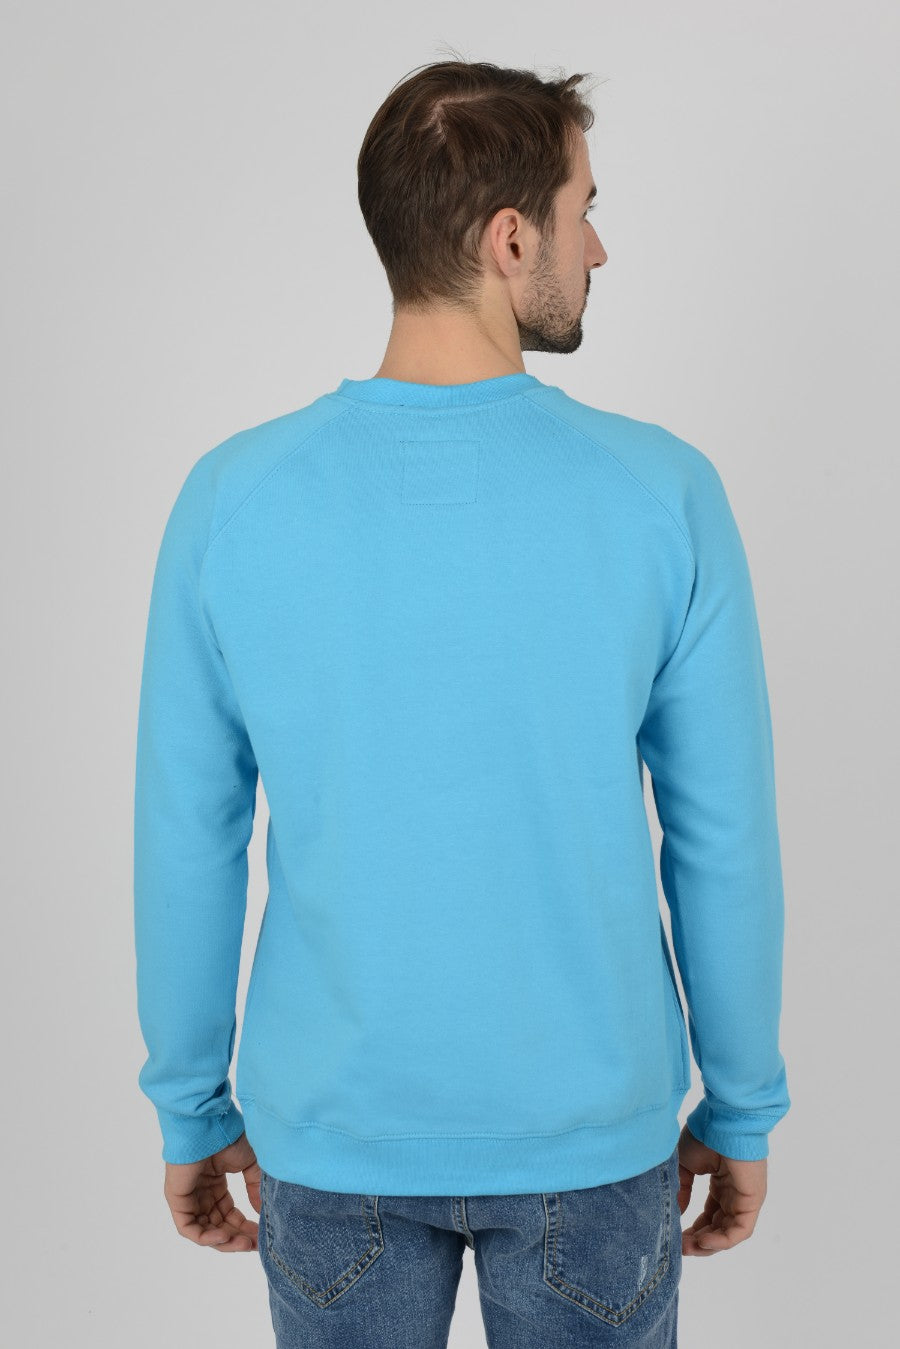 Mens-Raglan-Sweatshirt-Casual-Azure-Blue